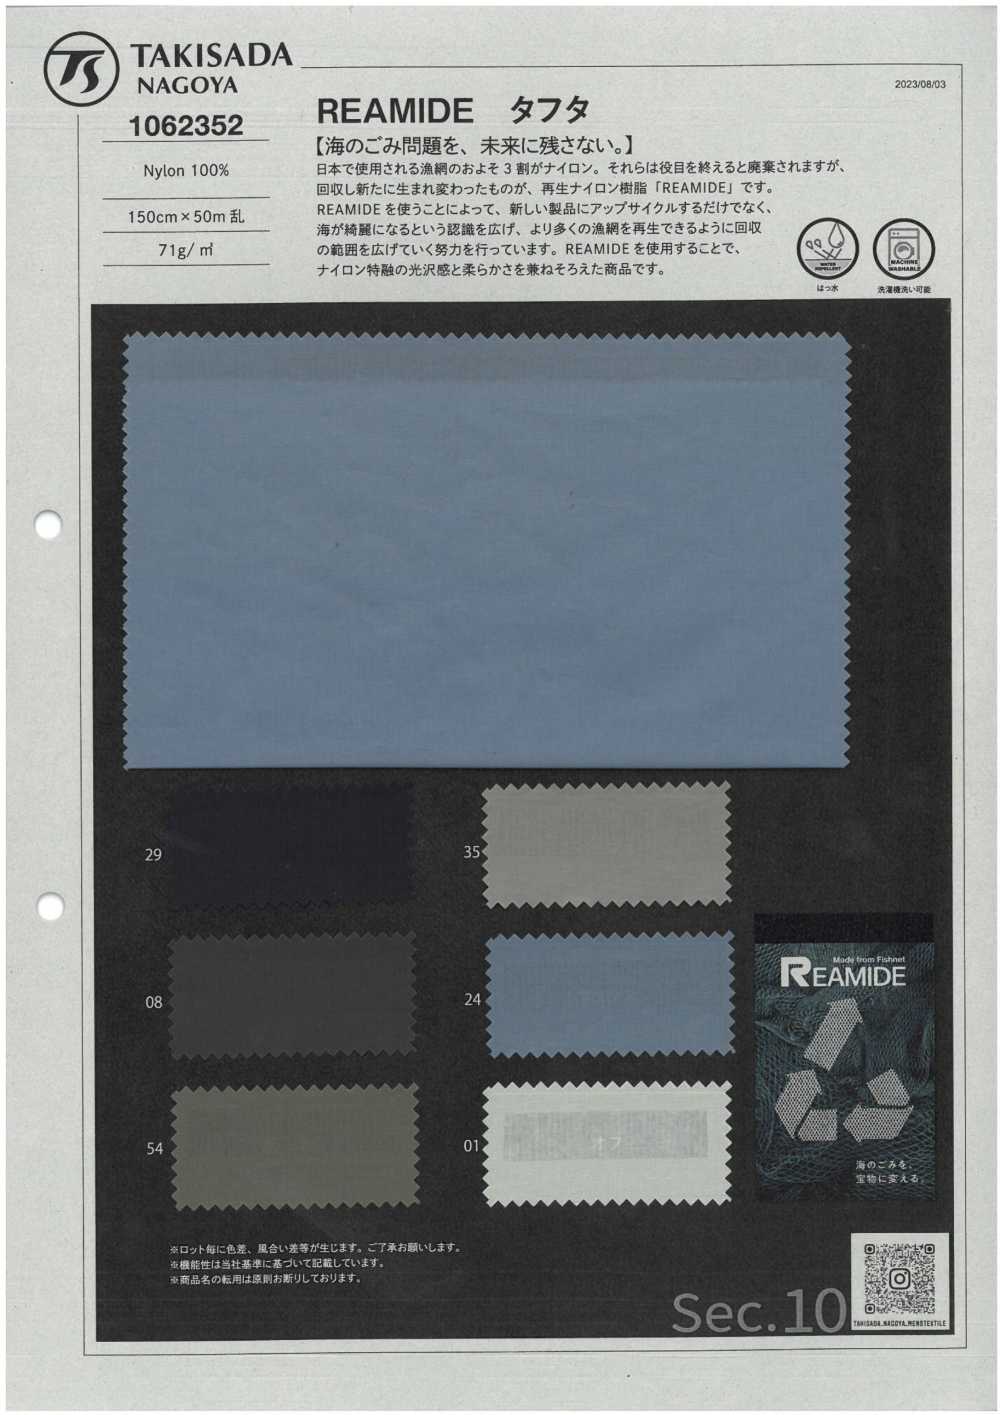 1062352 RÉAMIDE Taffetas[Fabrication De Textile] Takisada Nagoya